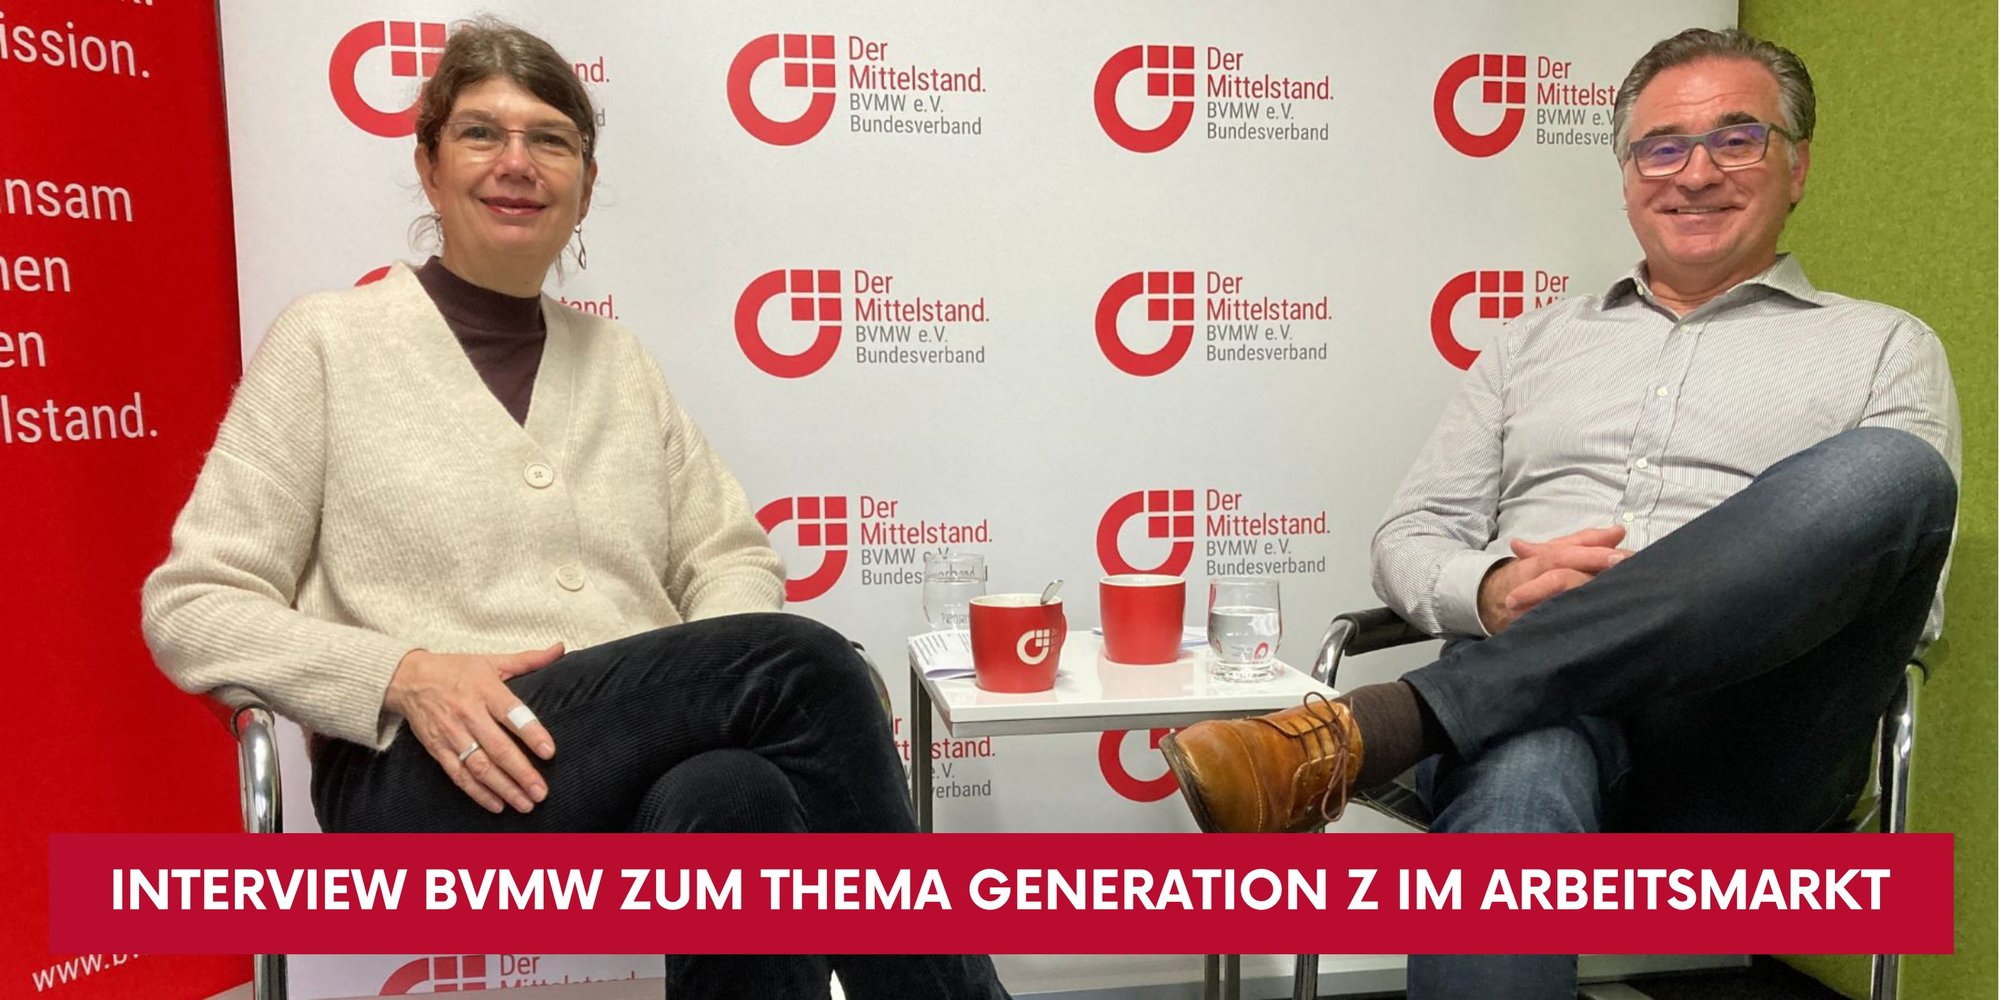 Interview Generation Z BVMW